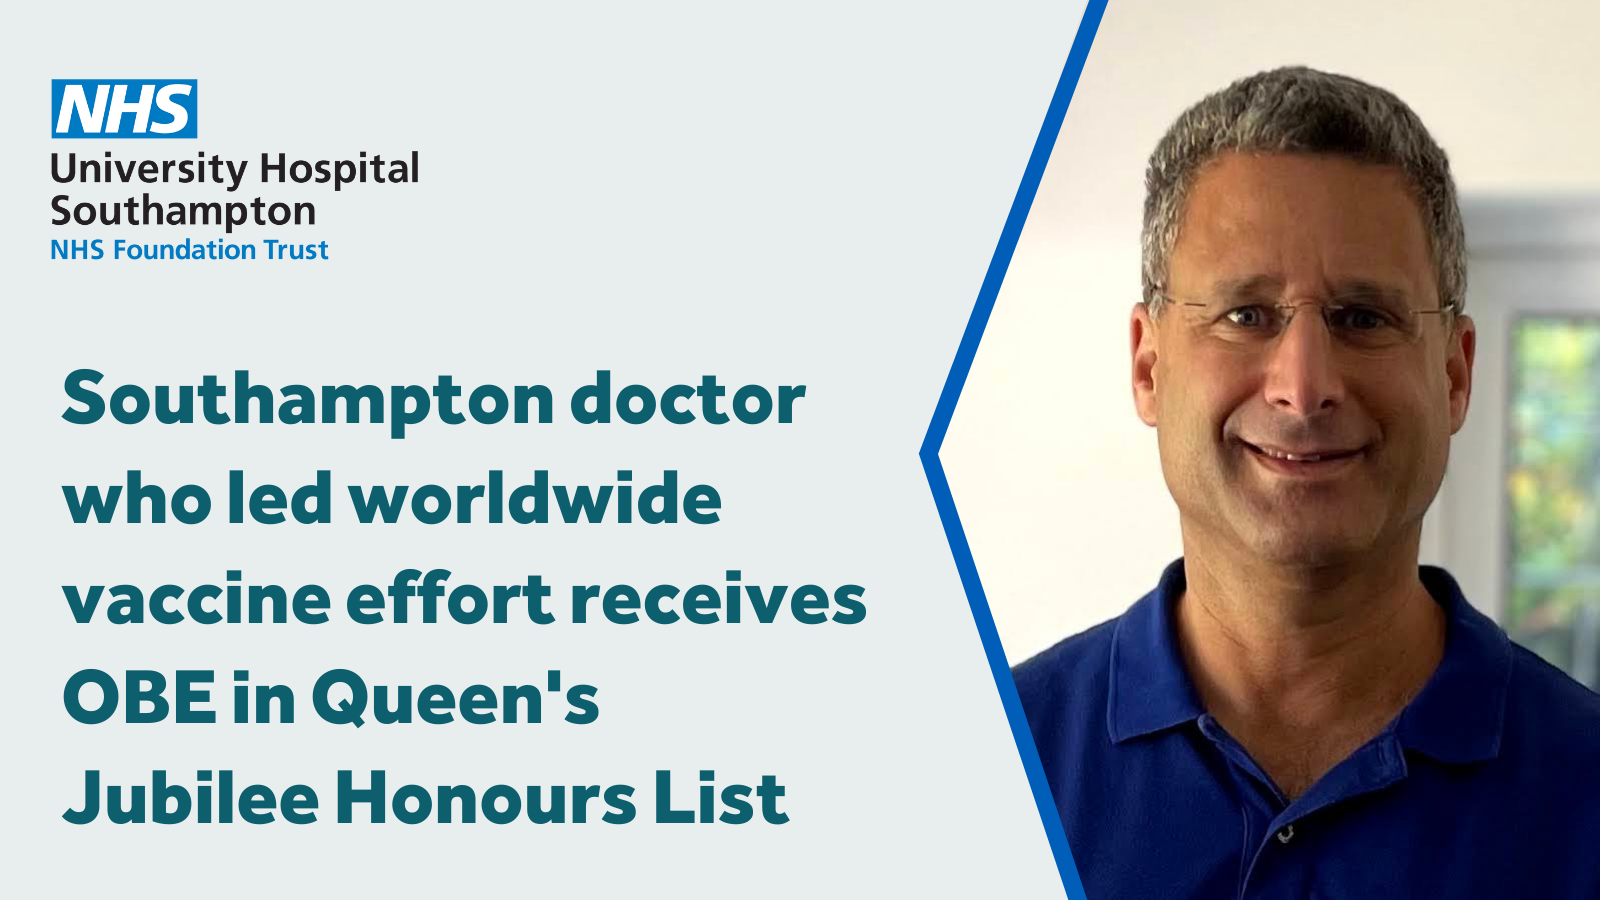 Southampton doctor who led worldwide vaccine effort receives OBE in Queen's Jubilee Honours List